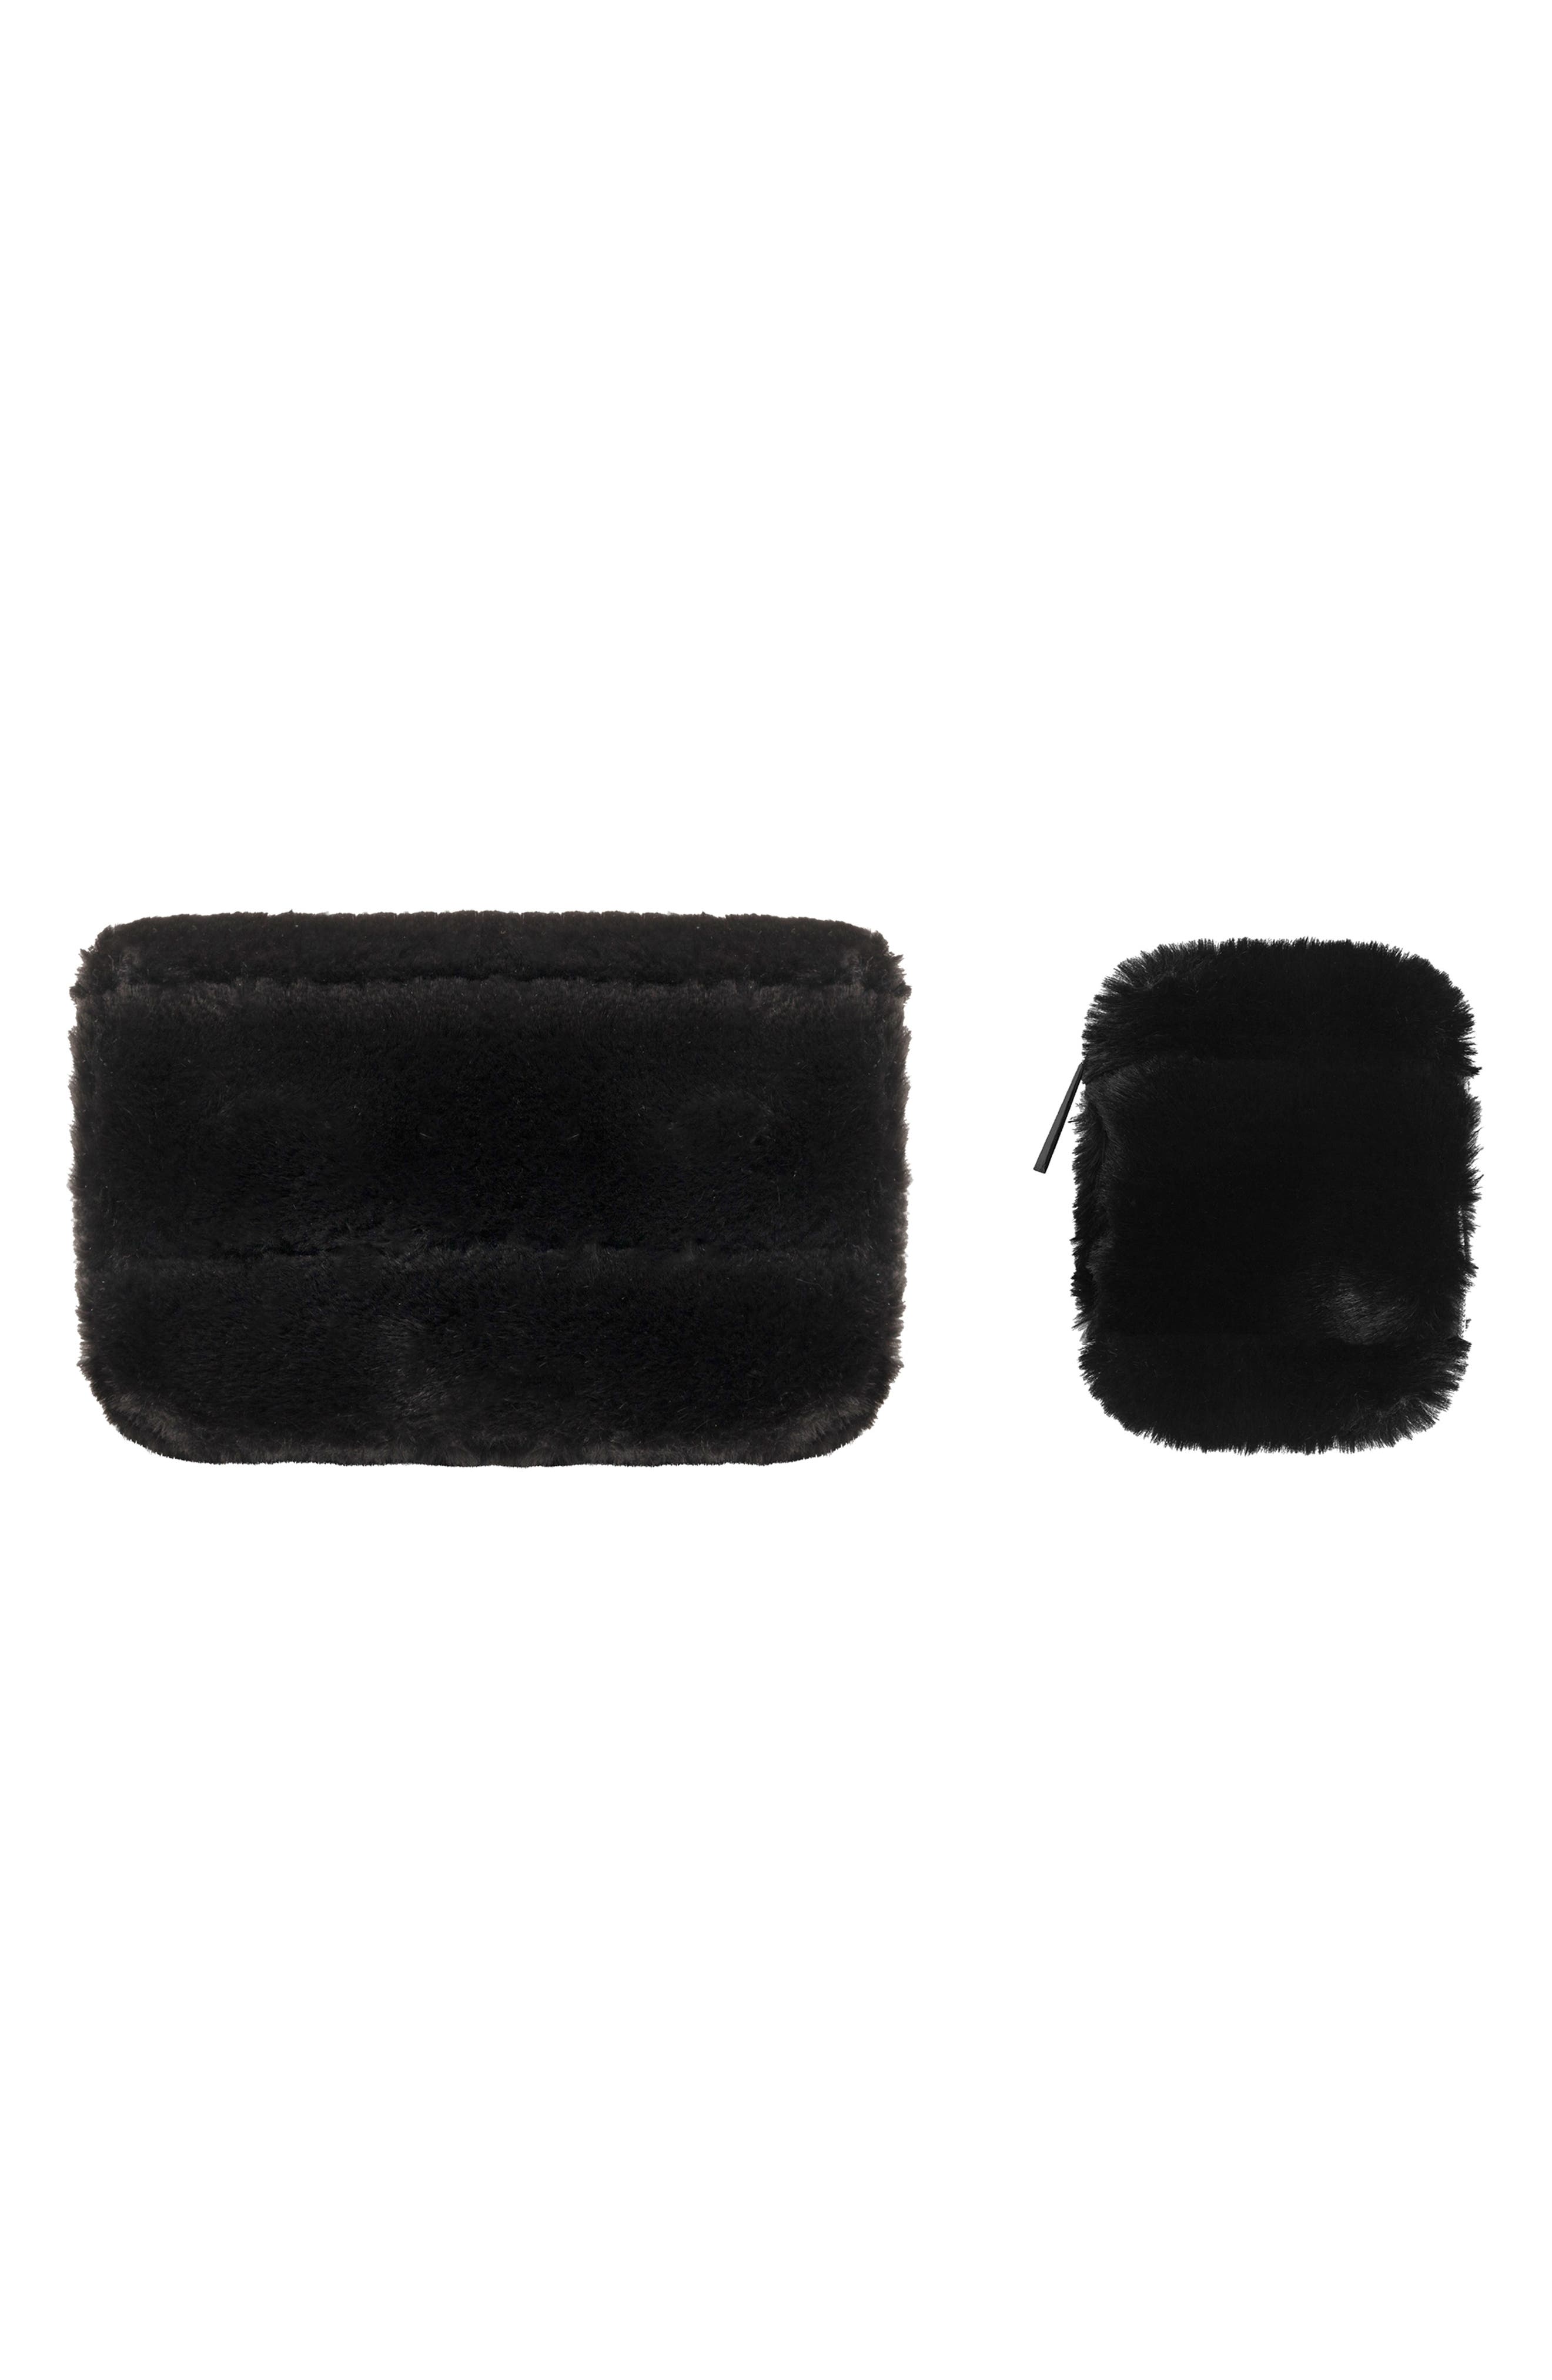 MYTAGALONGS Faux Fur Earbud & Tech Accessory Cases in Black